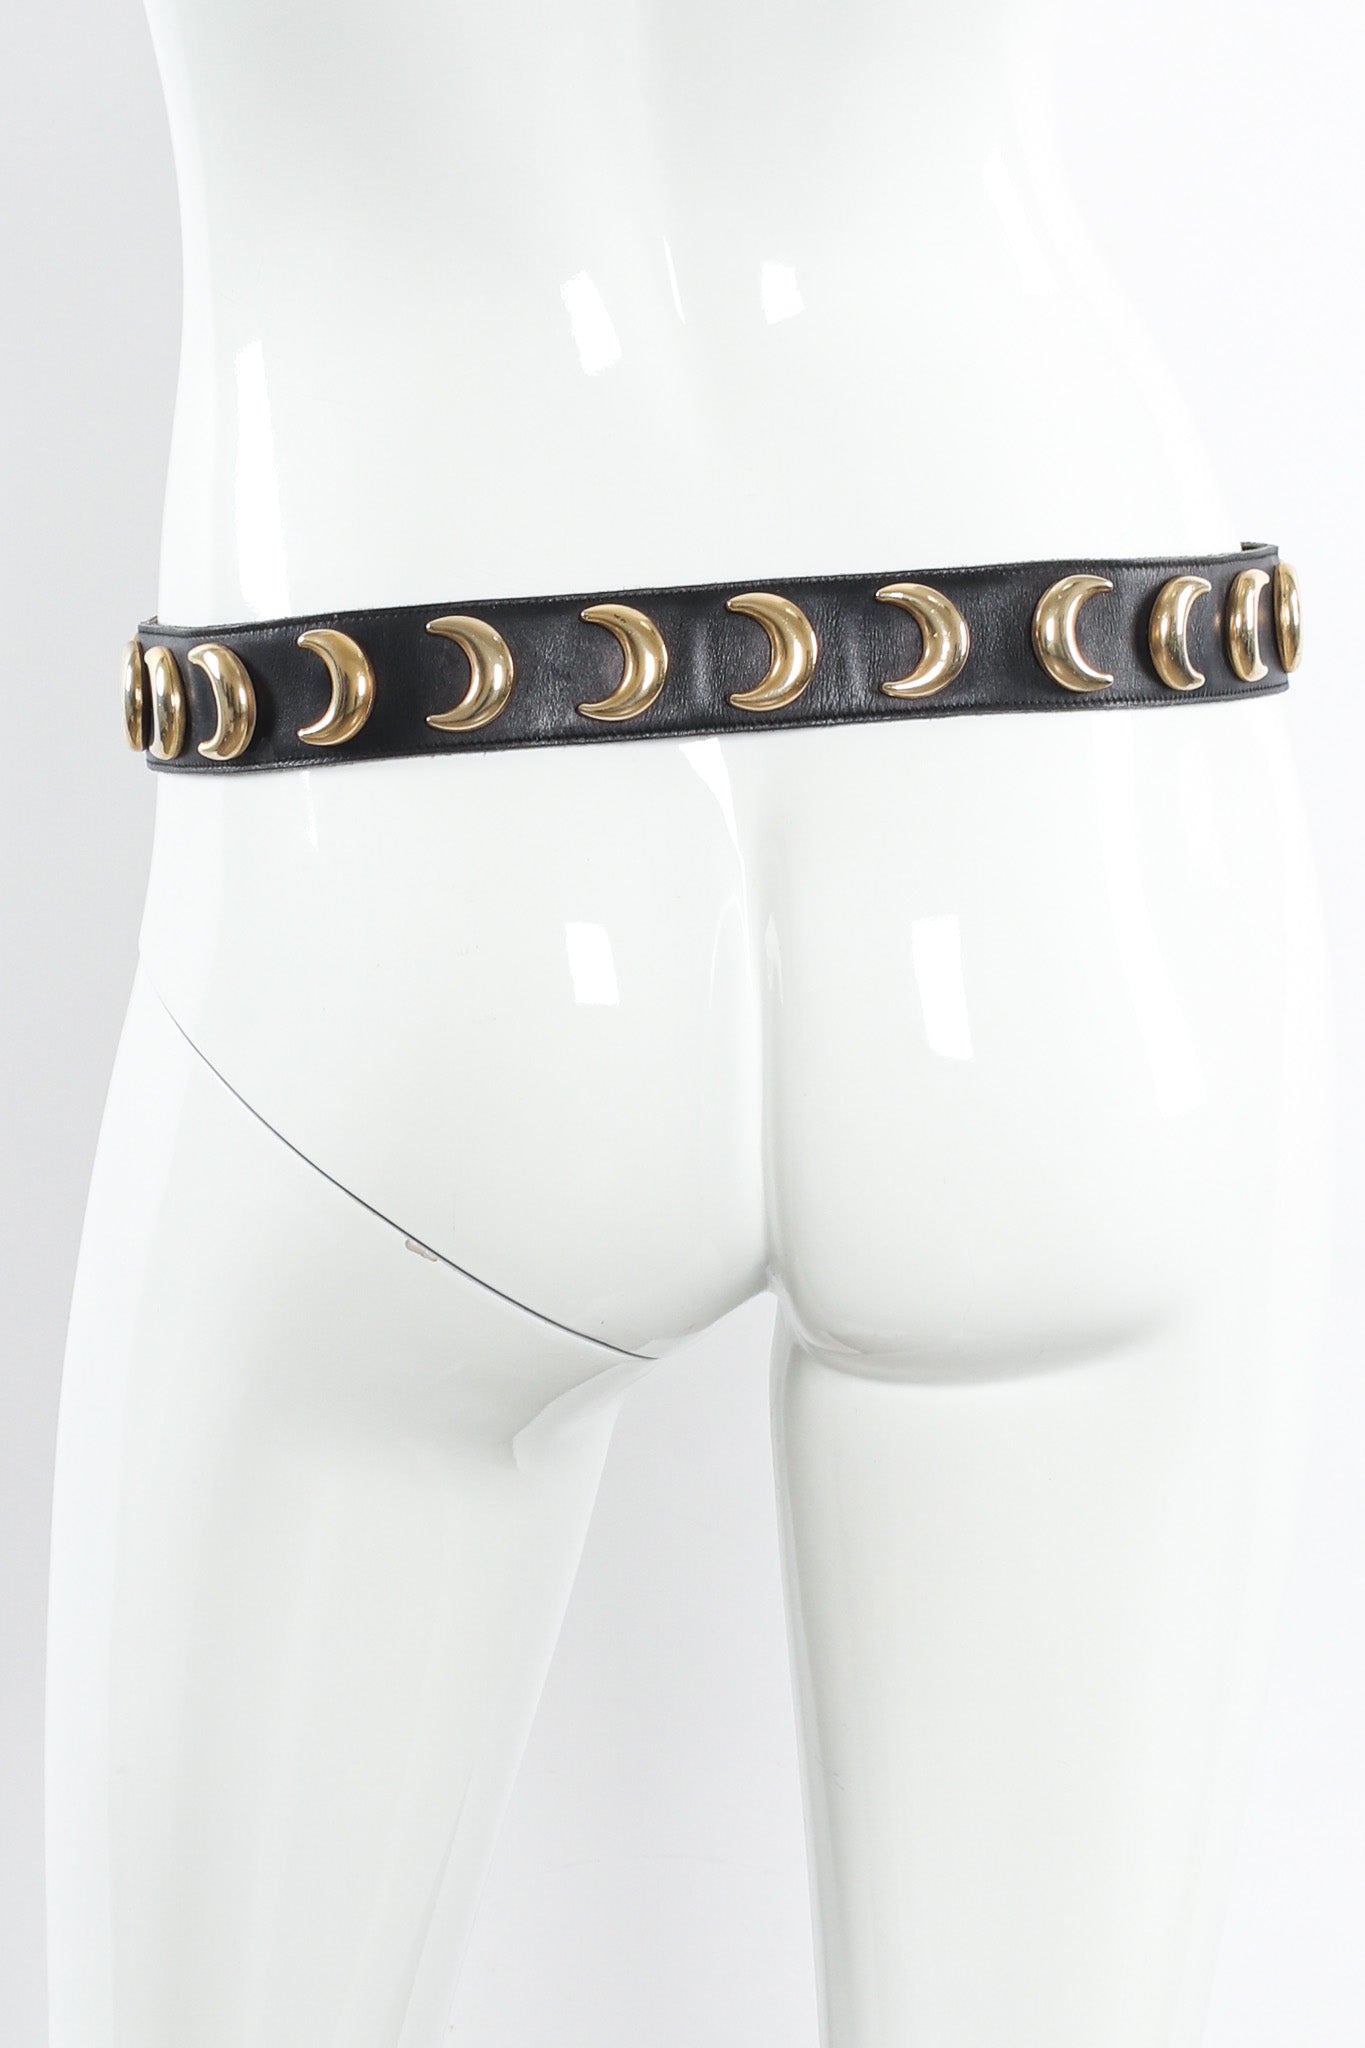 rattler belt by Bijoux Medici mannequin back @recessla